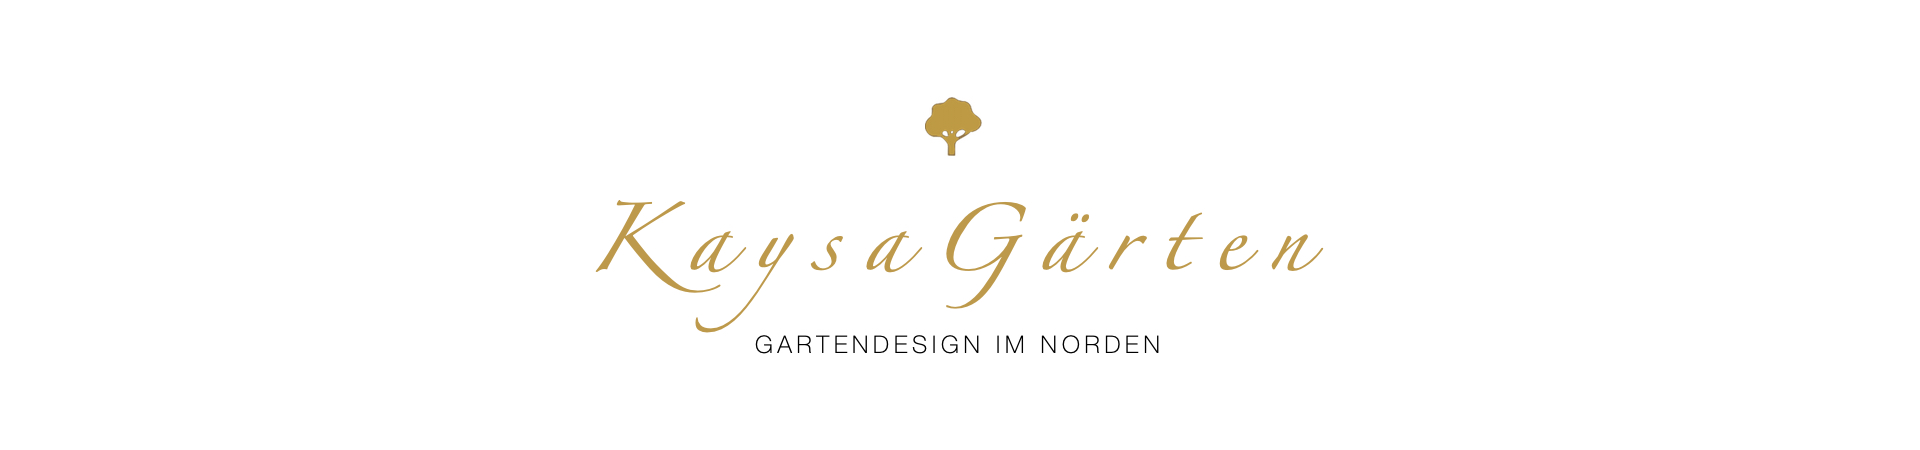 KaysaGärten - Gartendesign im Norden